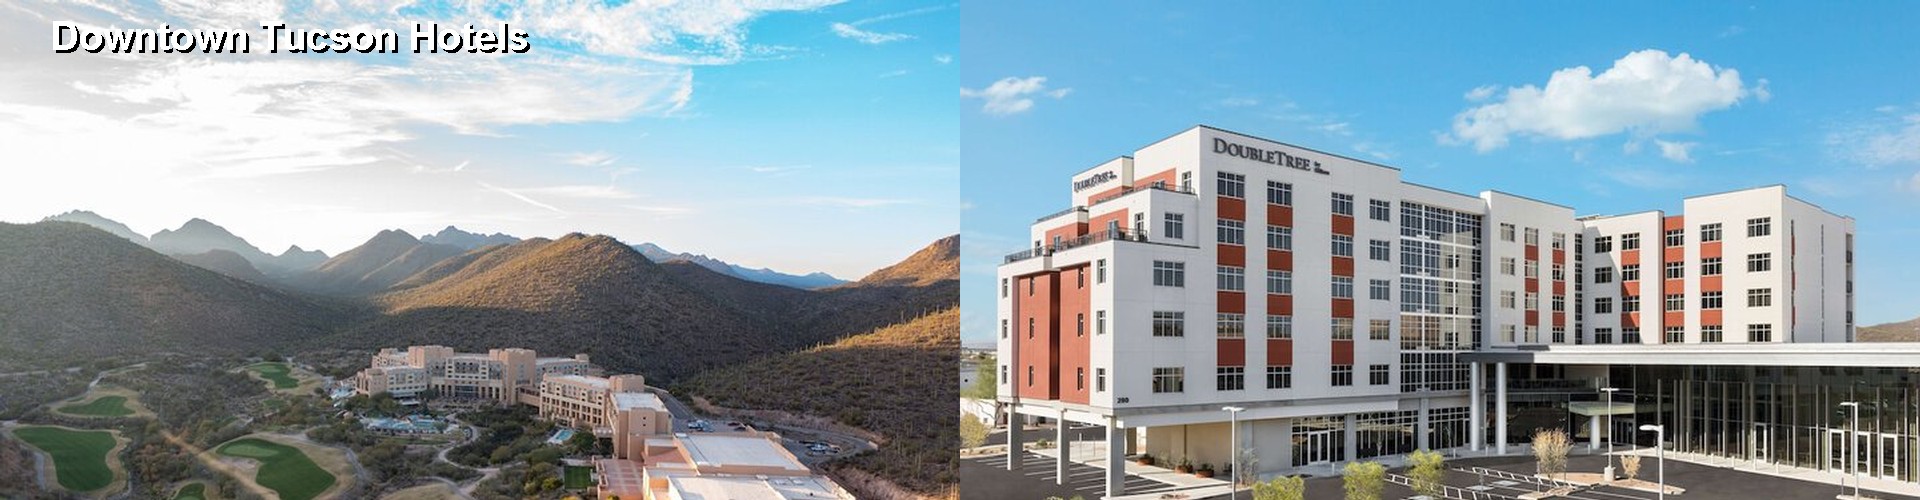 3 Best Hotels near Downtown Tucson